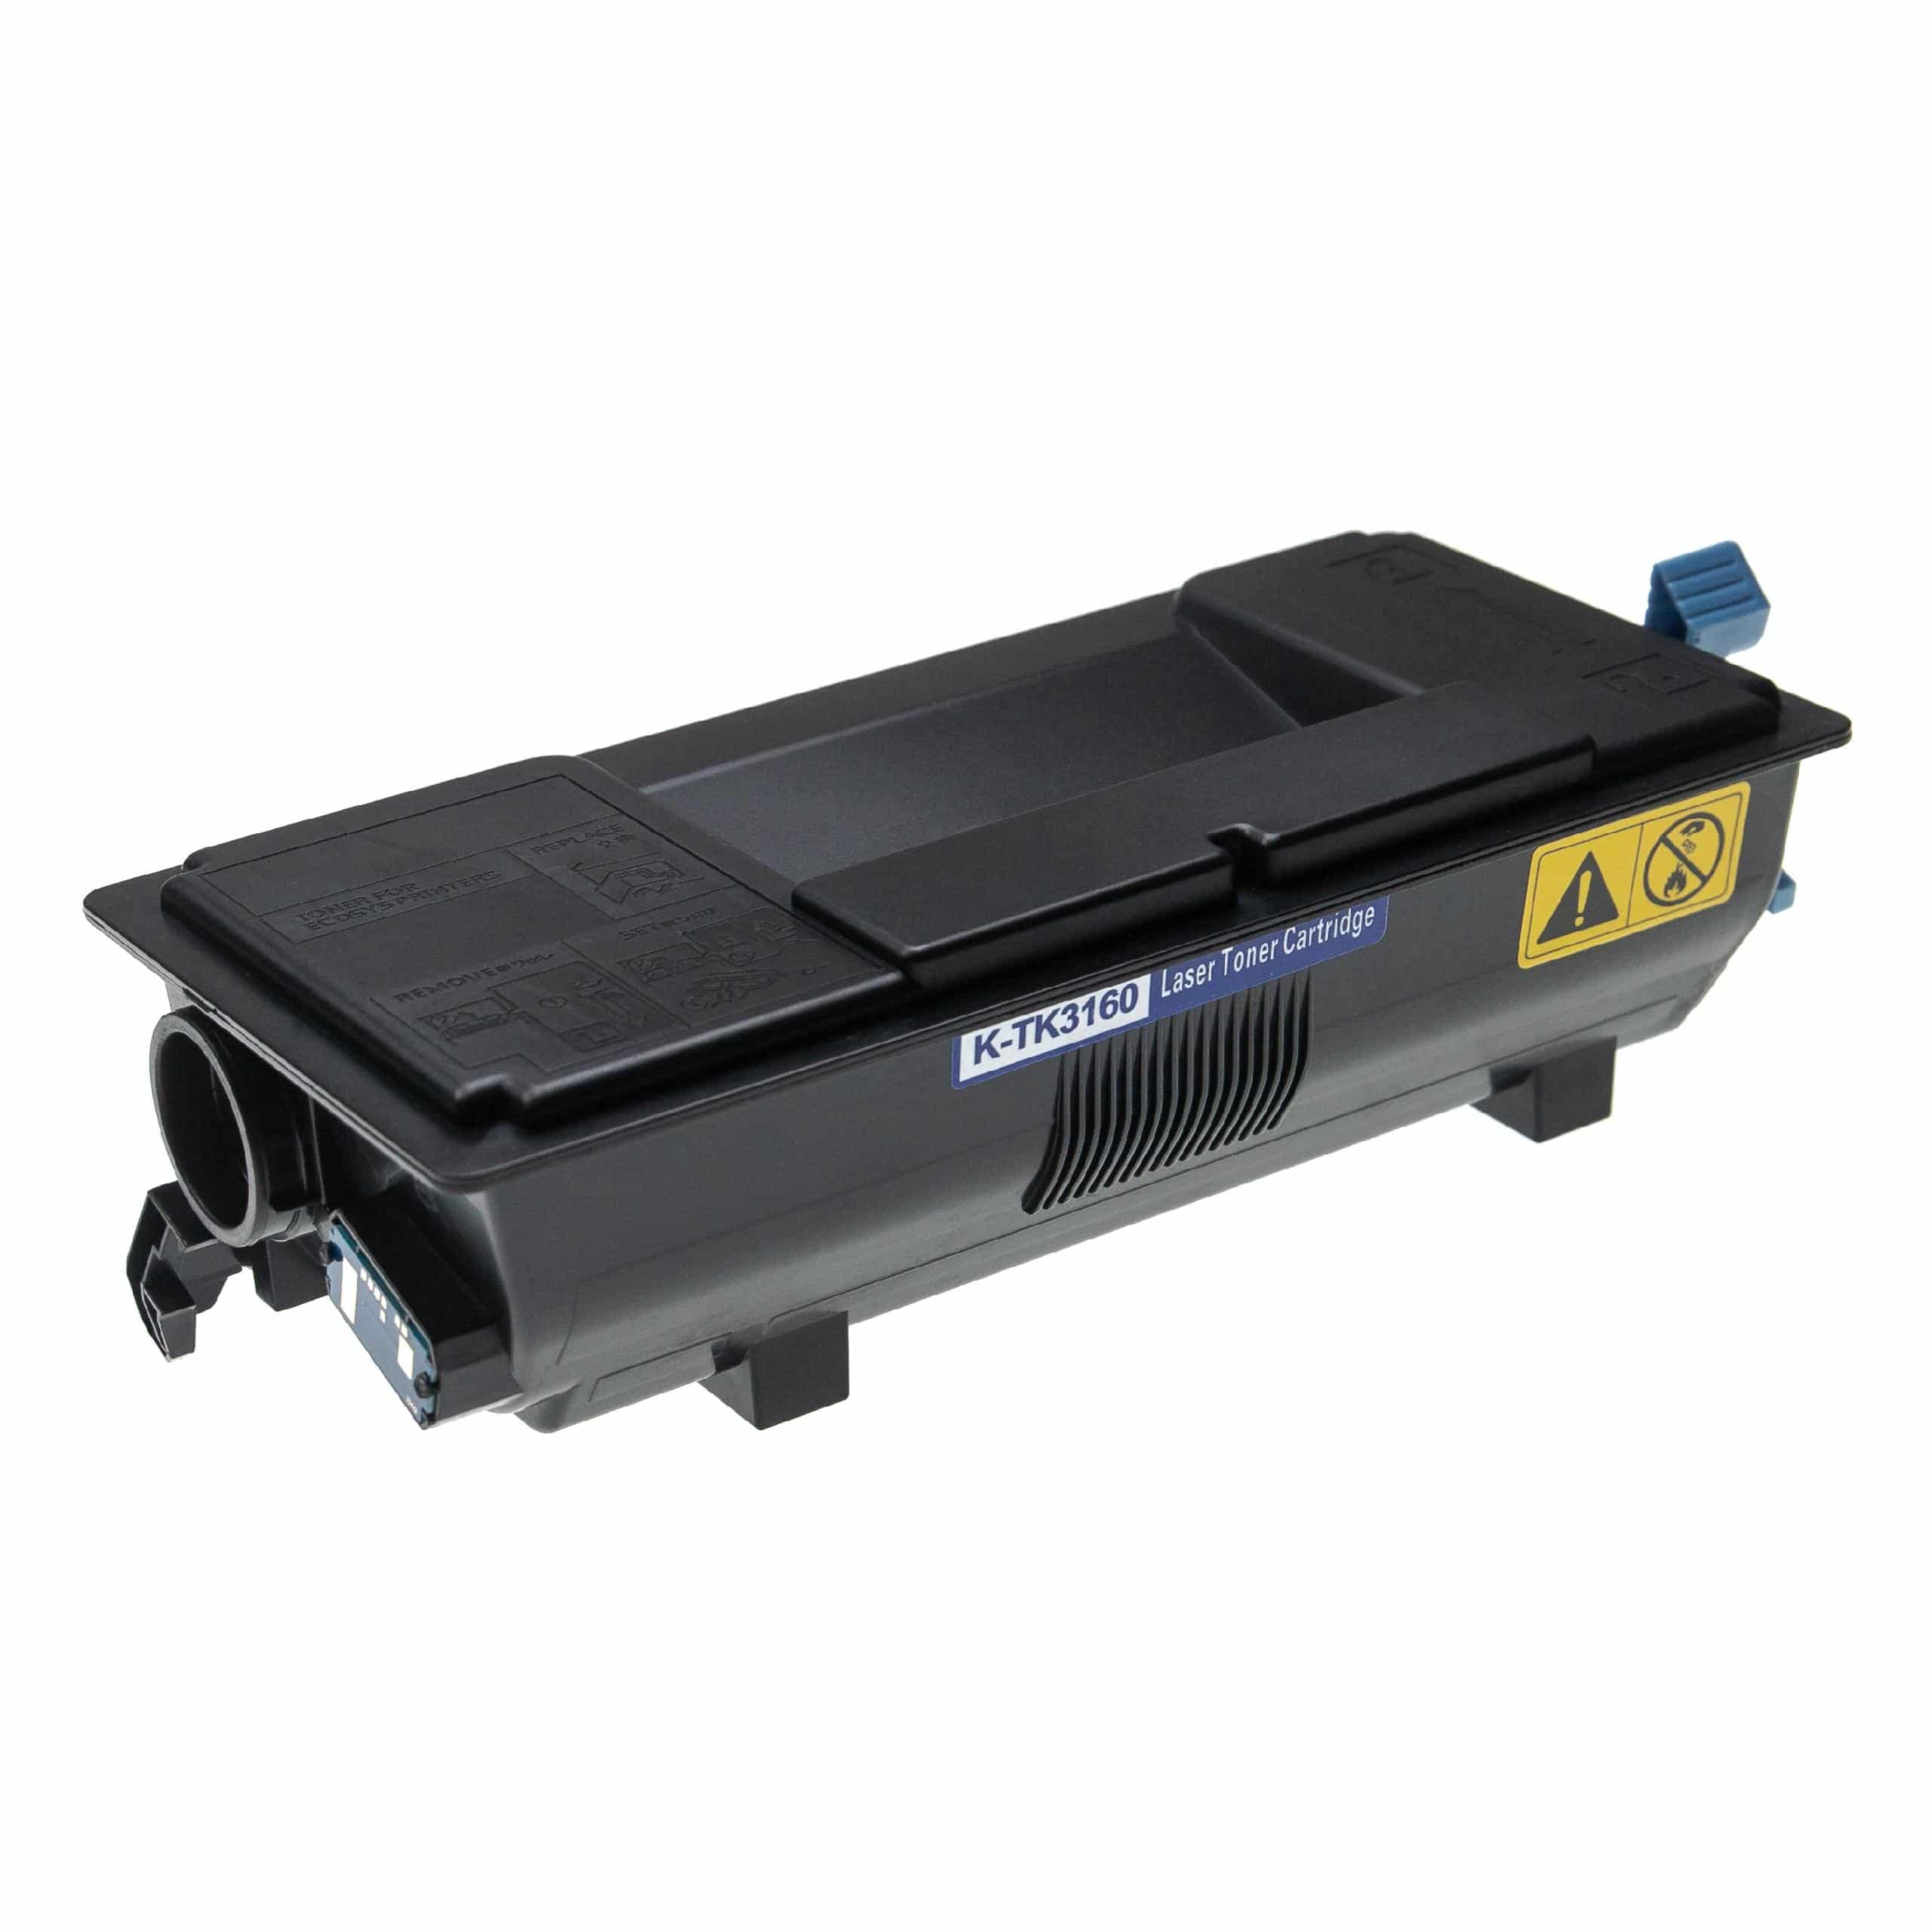 Toner replaces Kyocera TK-3160 for Kyocera Printer + Waste Toner Container, Black